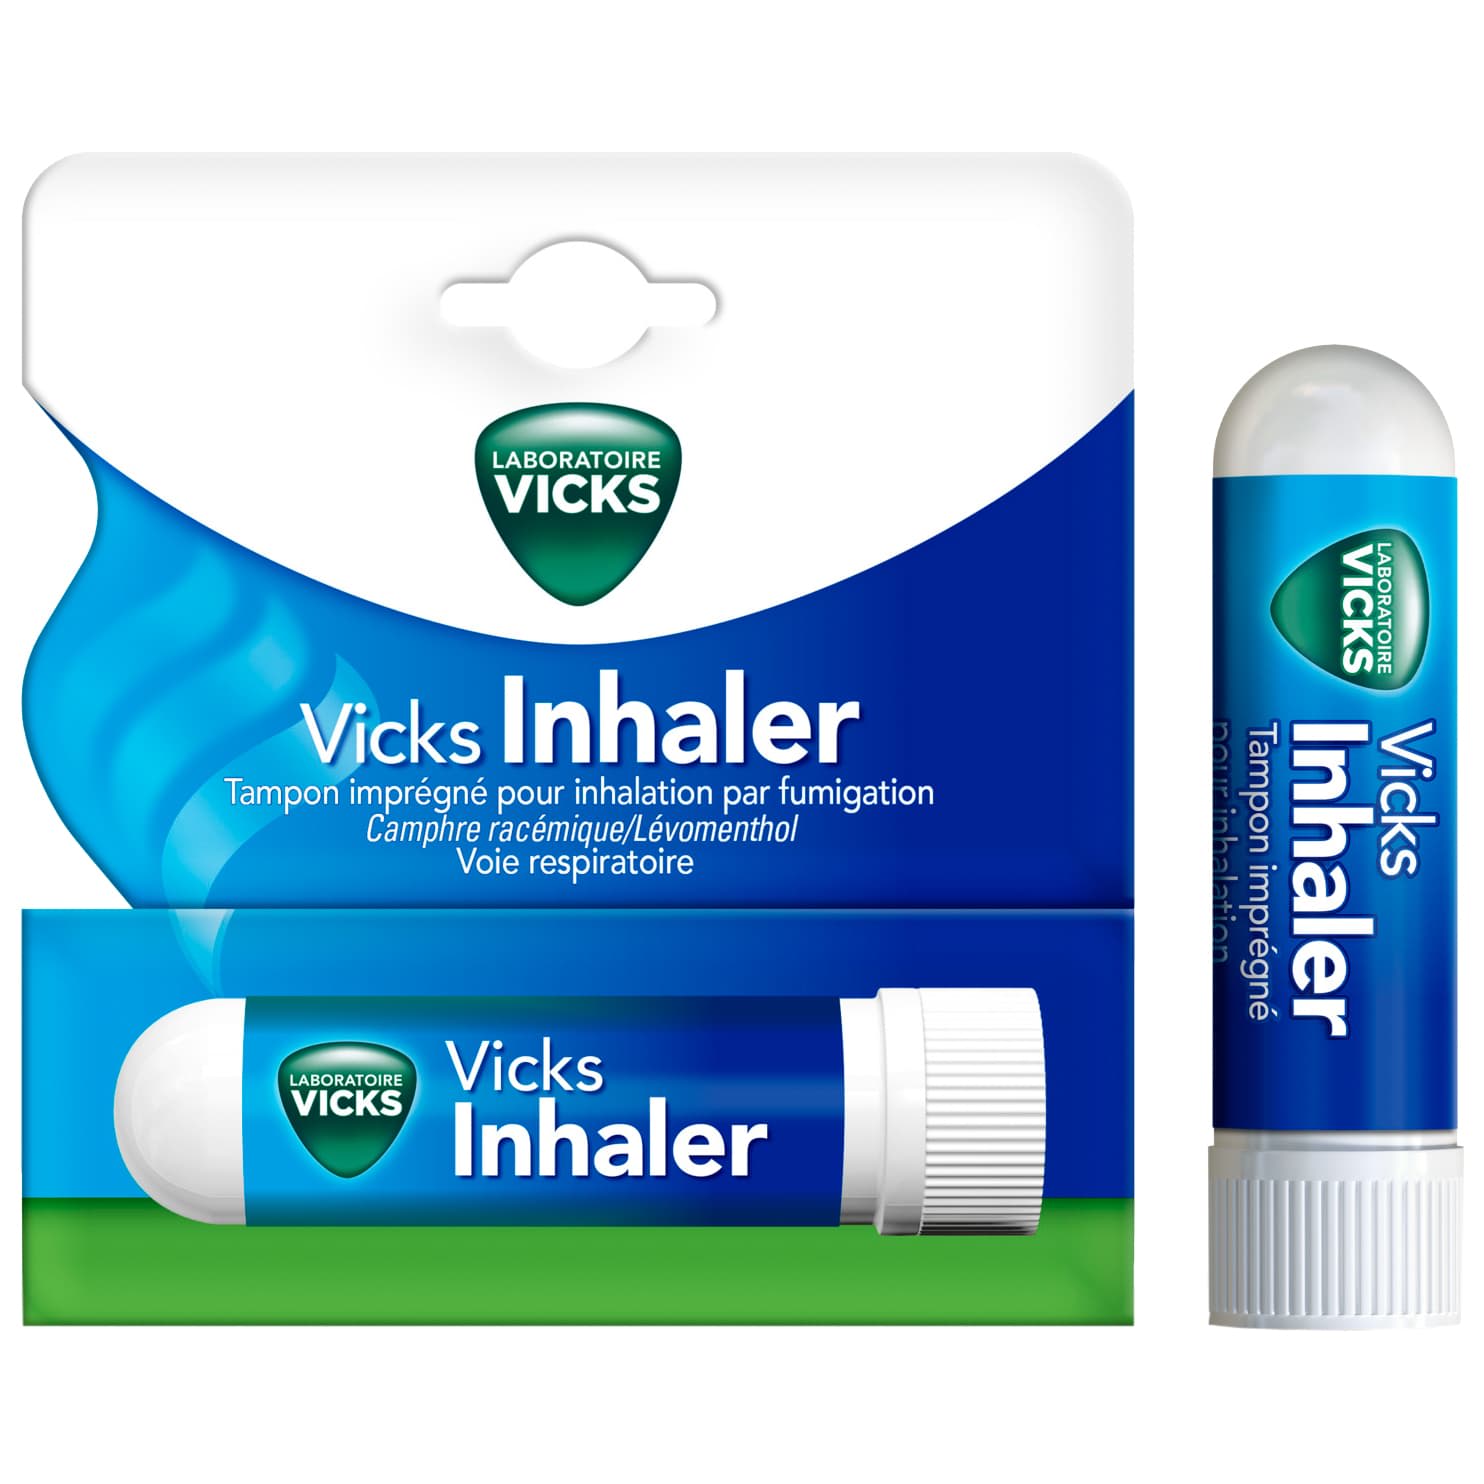 Vicks Inhaler Nasal Stick 0.5ml